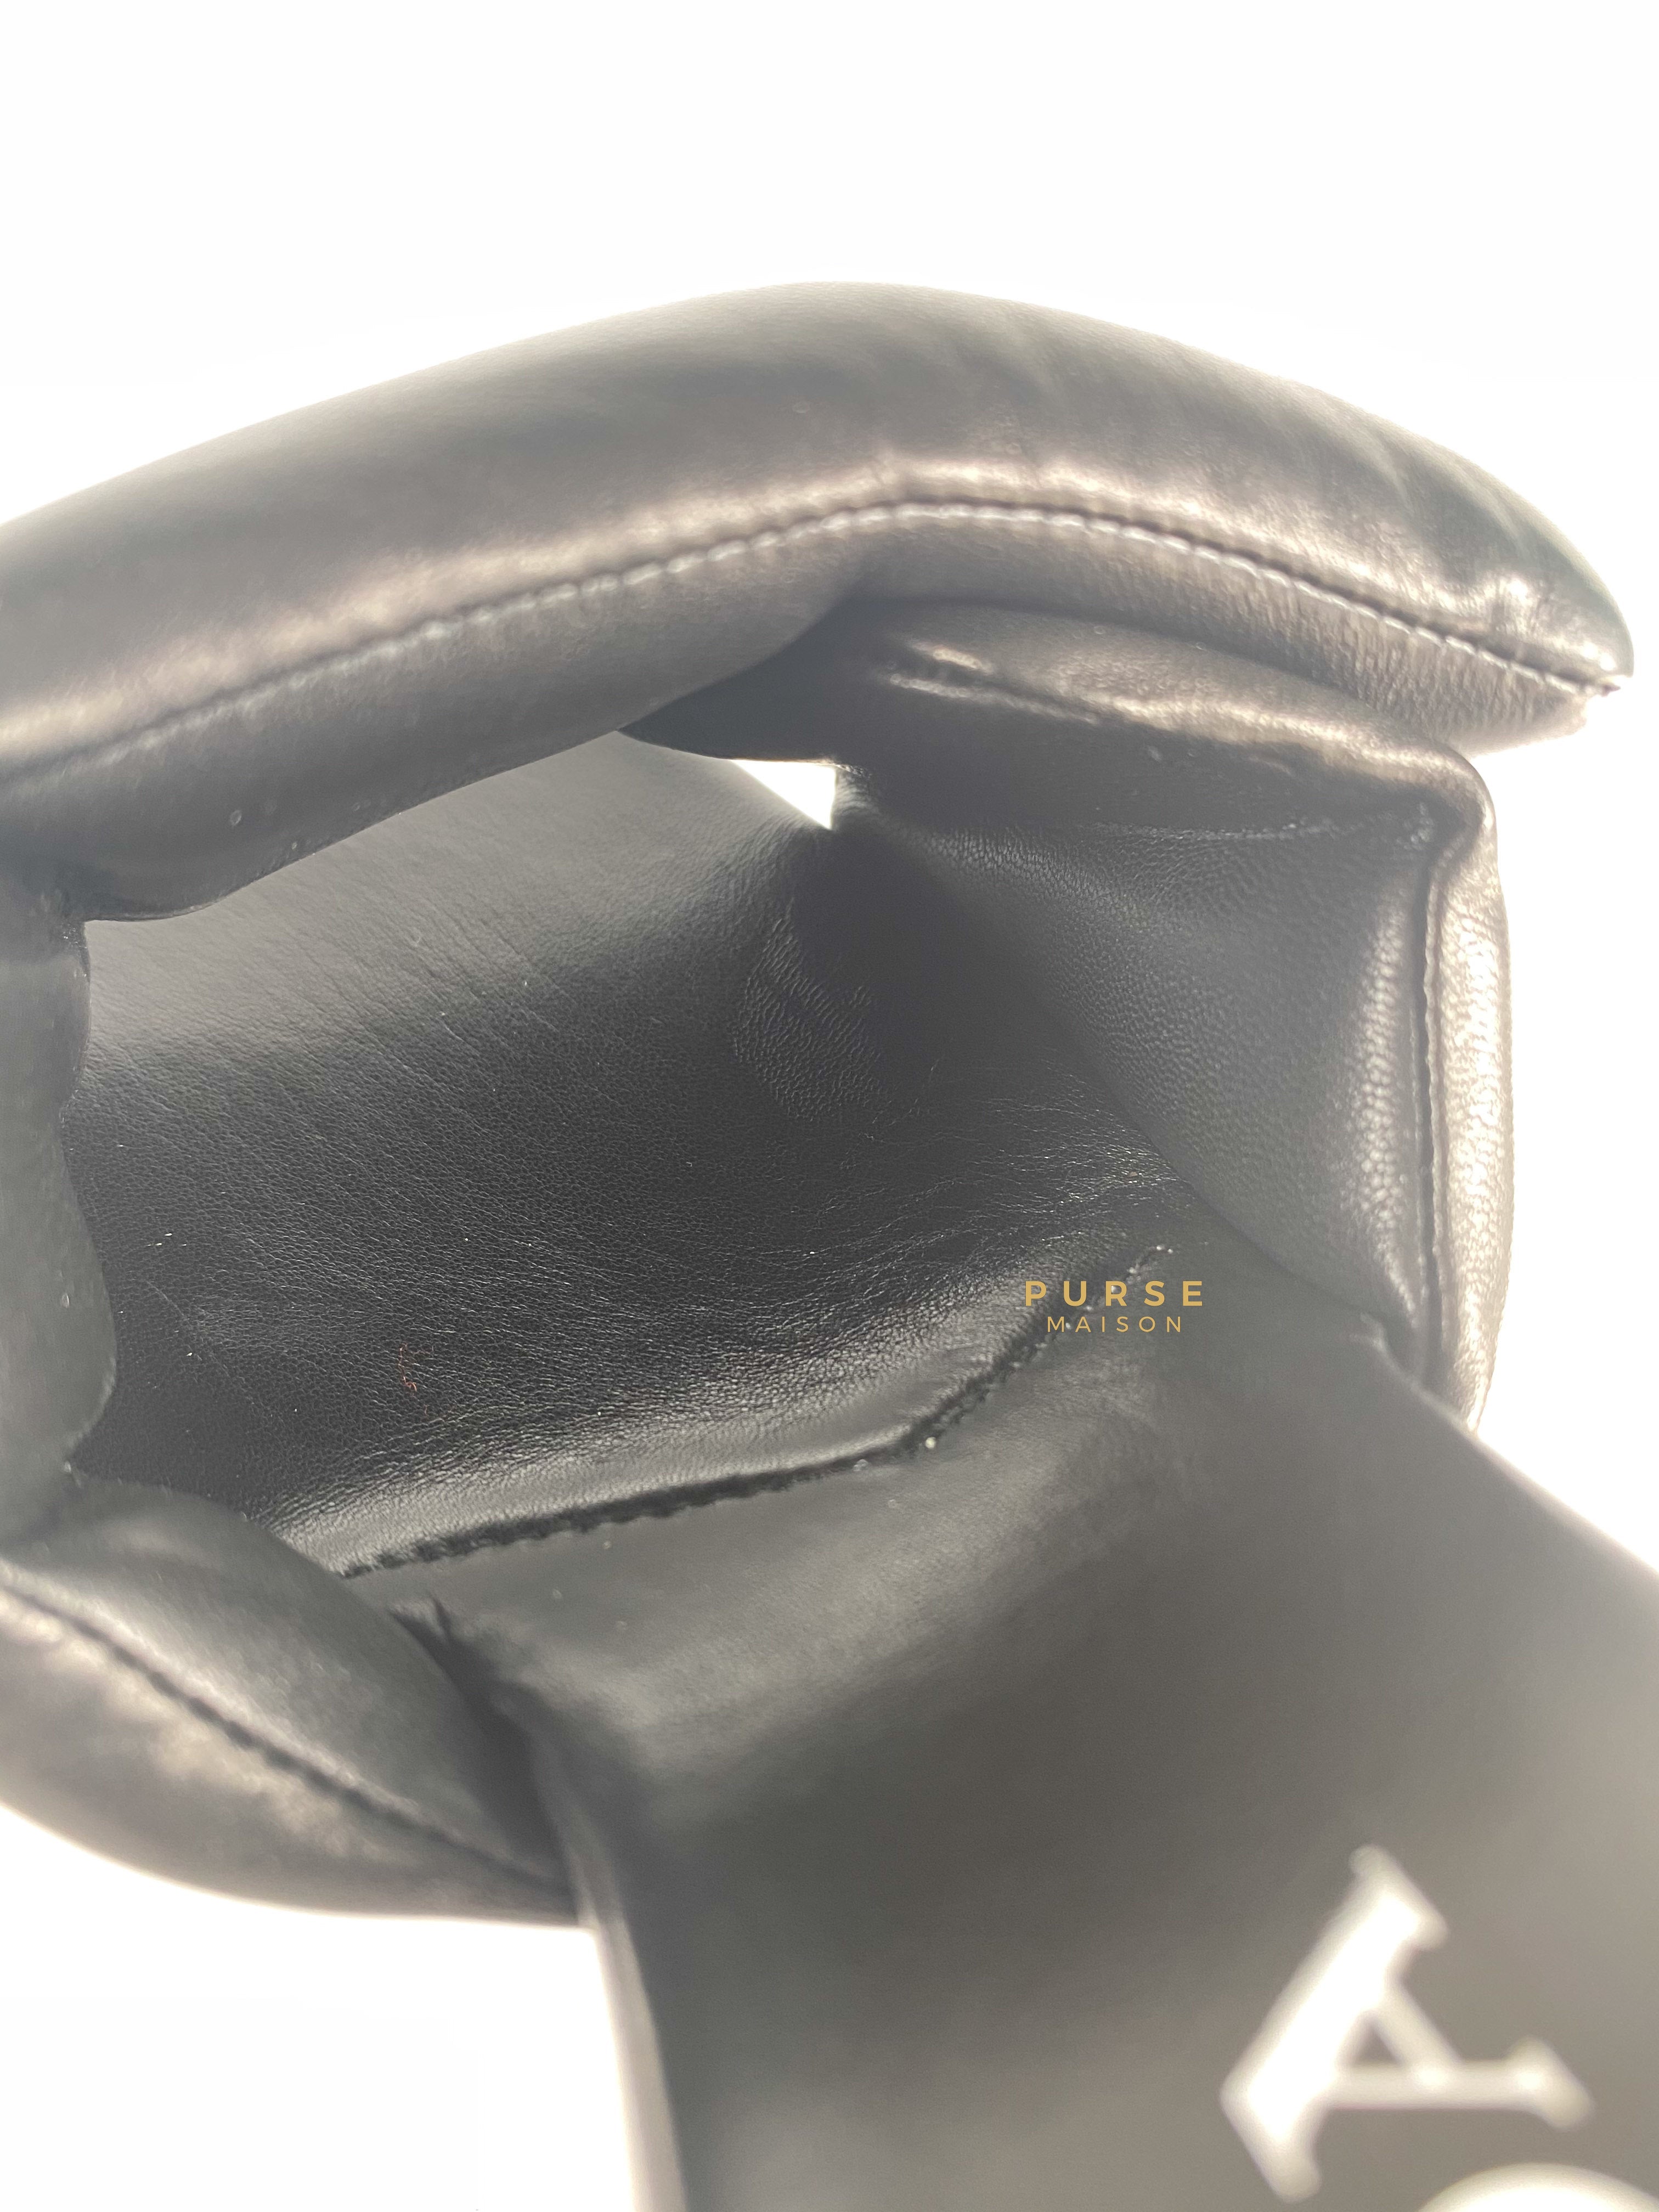 Prada Calzature Donna Nappa Soft Black Sandals (Size 38 EU, 24.5cm) | Purse Maison Luxury Bags Shop